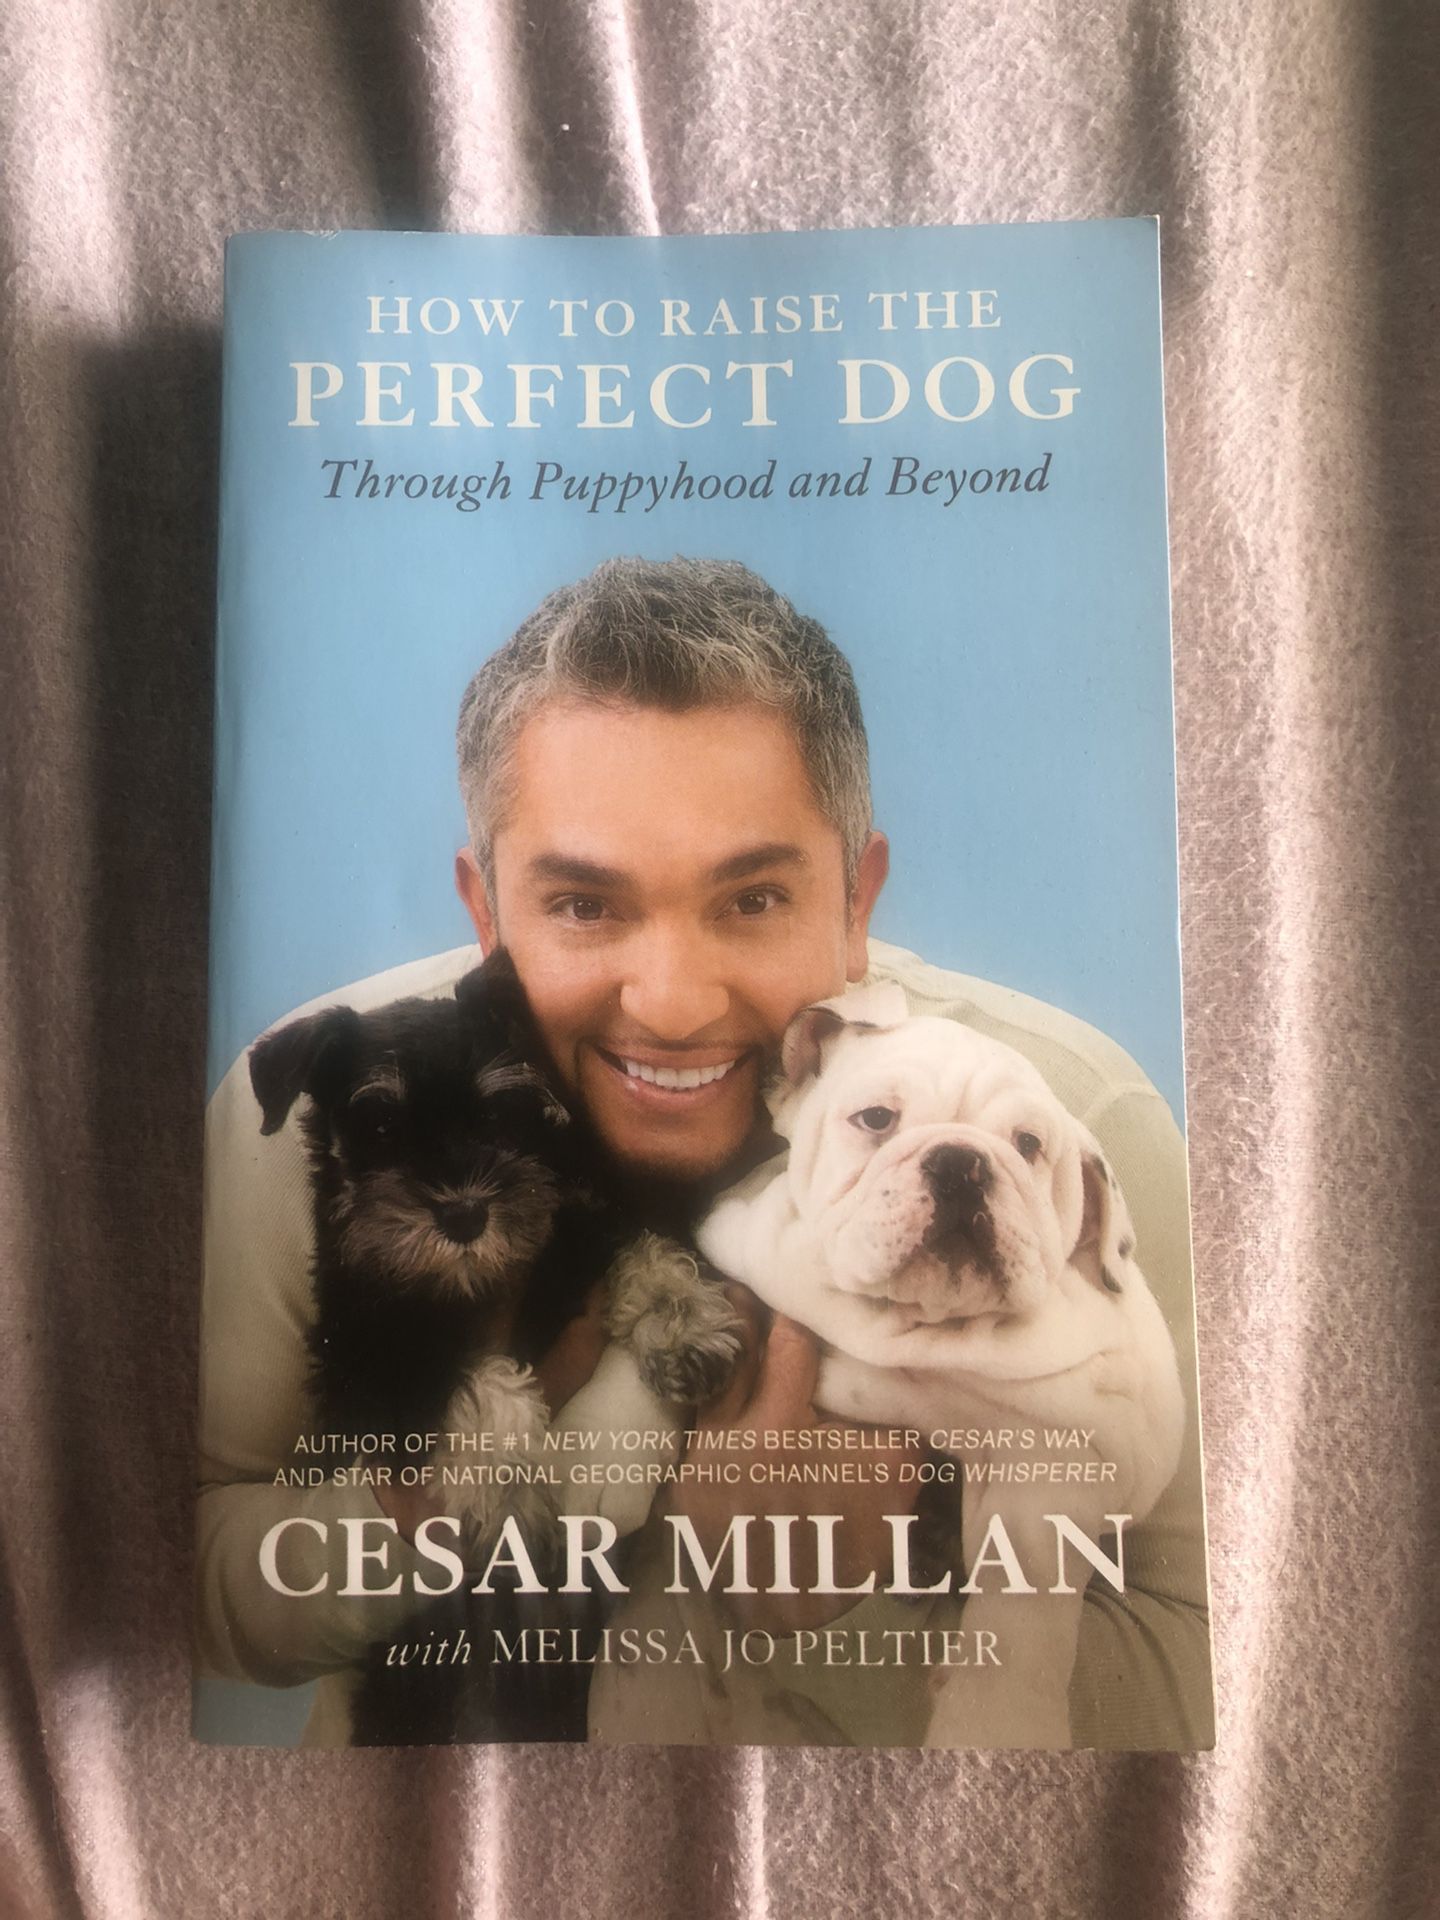 How to raise the perfect dog Cesar Millan w/ Melissa Jo Peltier